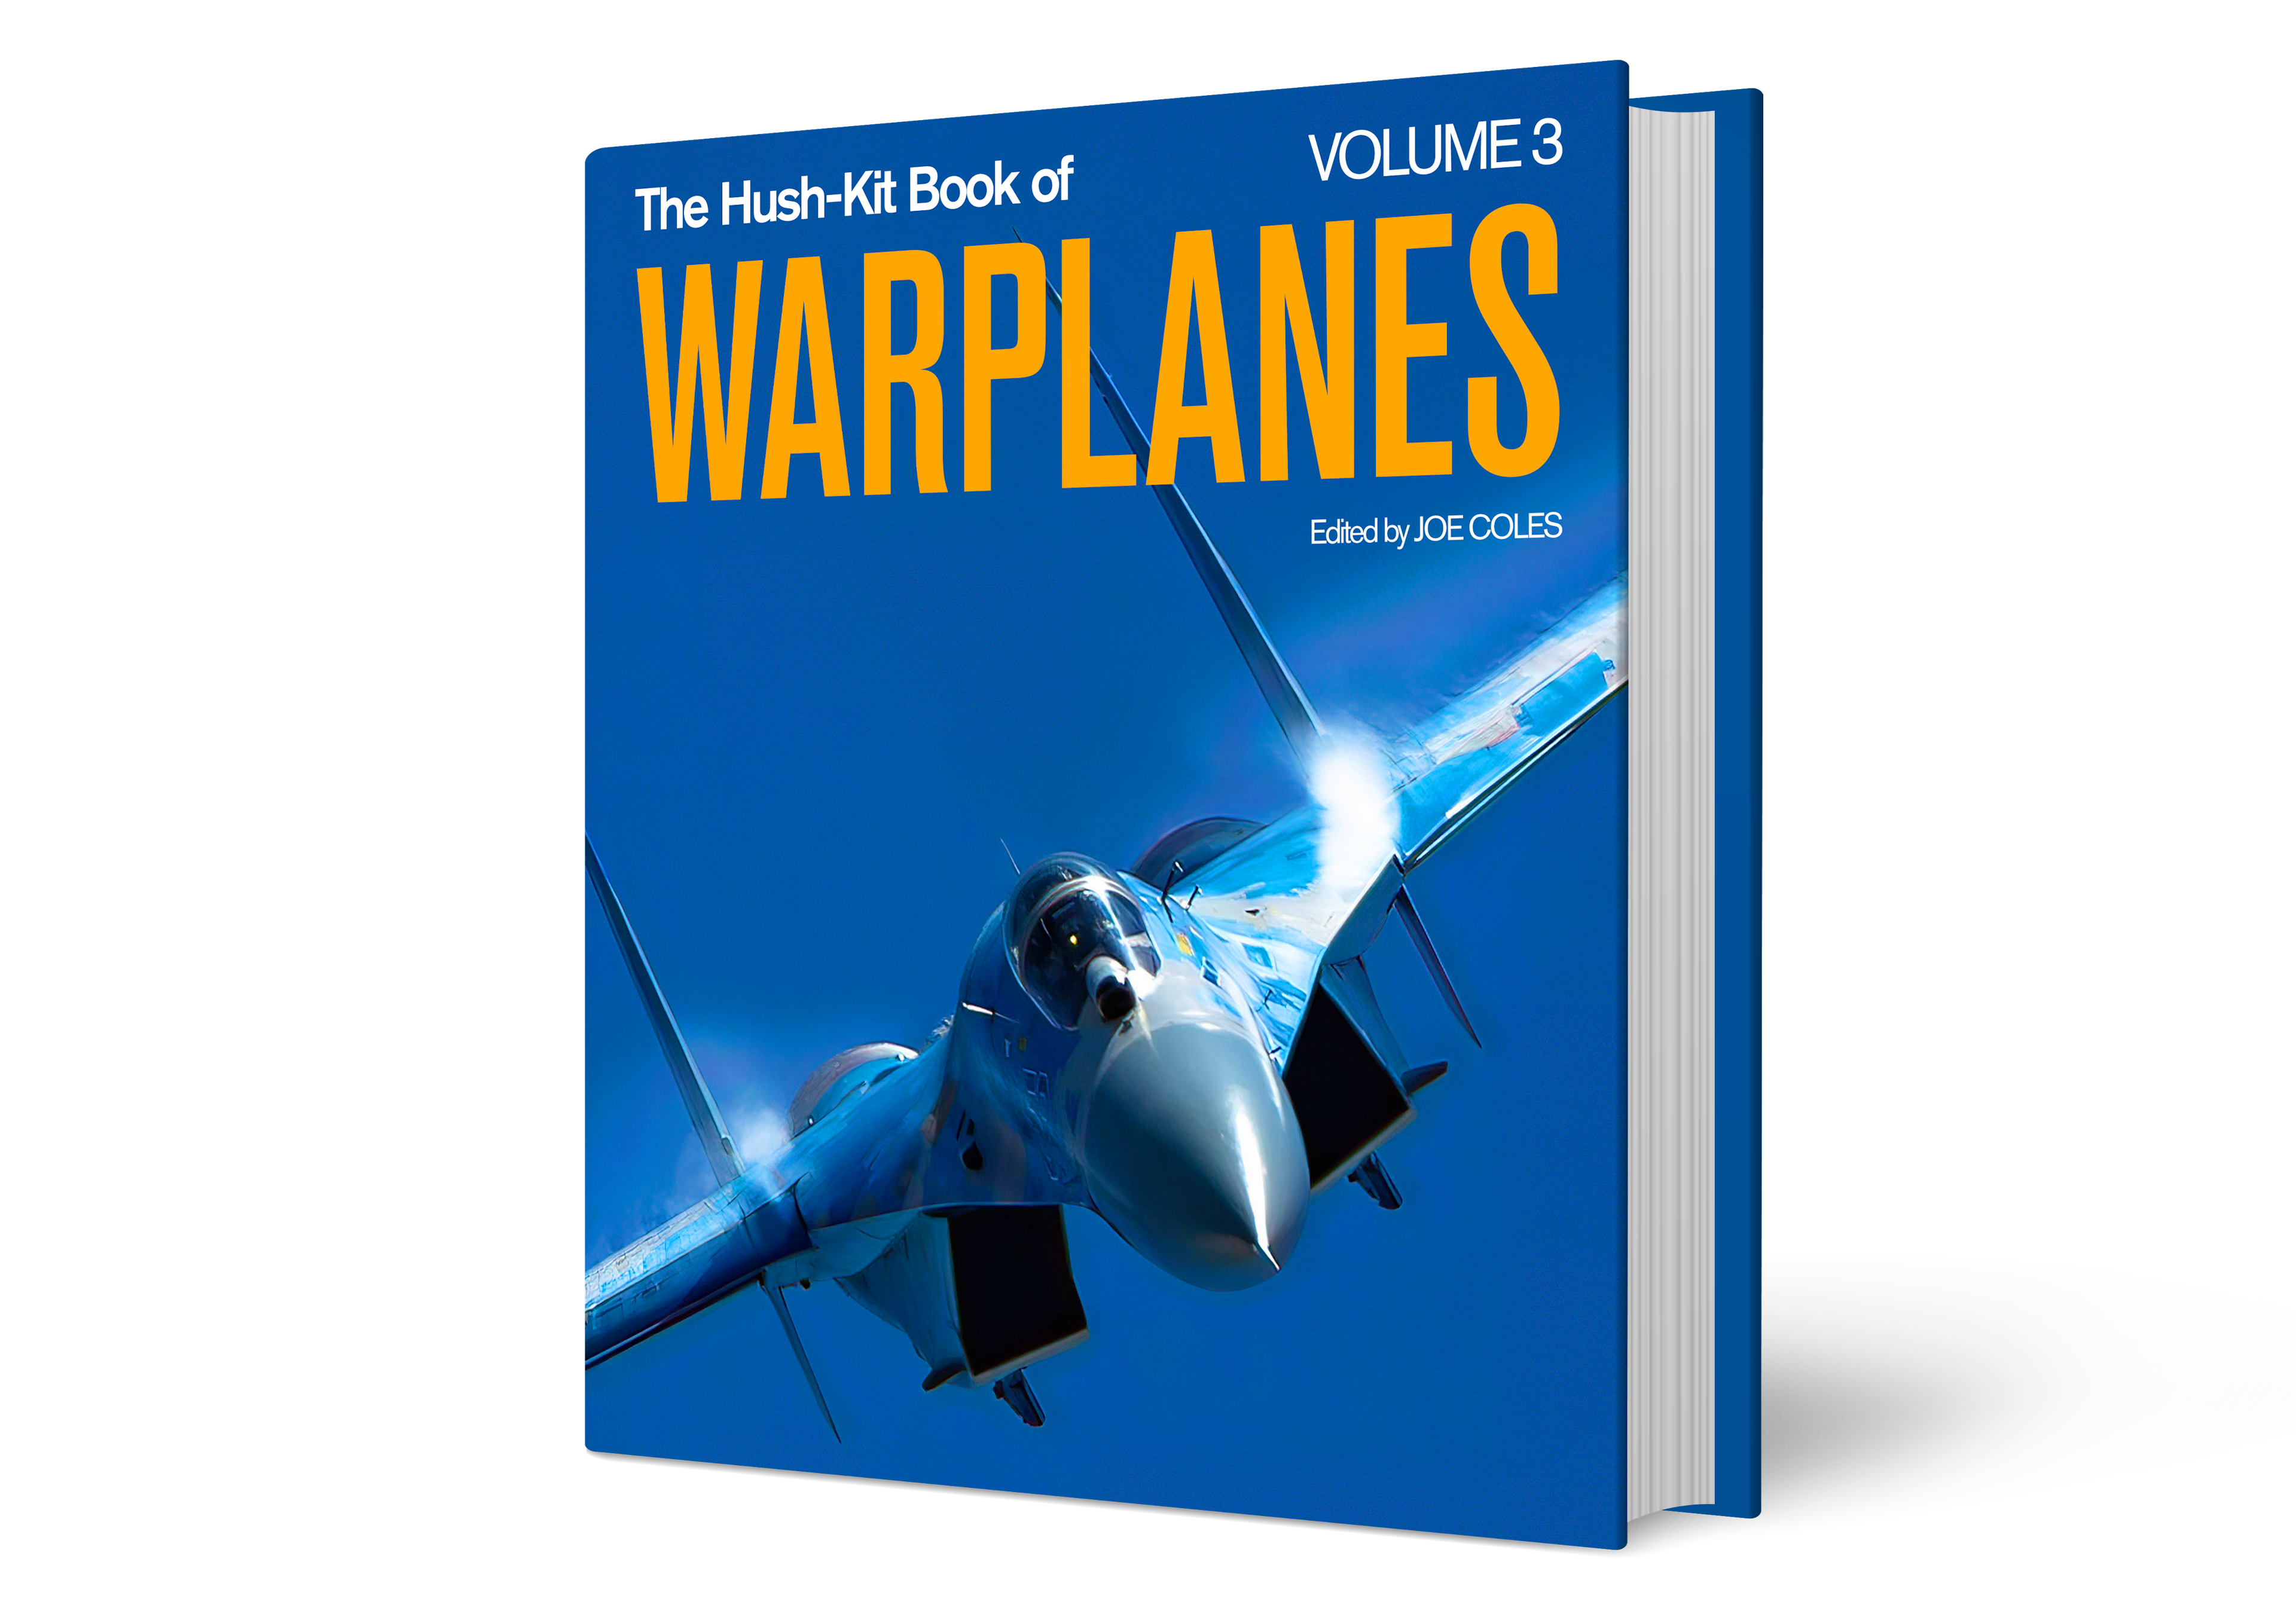 The Hush-Kit Book of Warplanes Vol 3